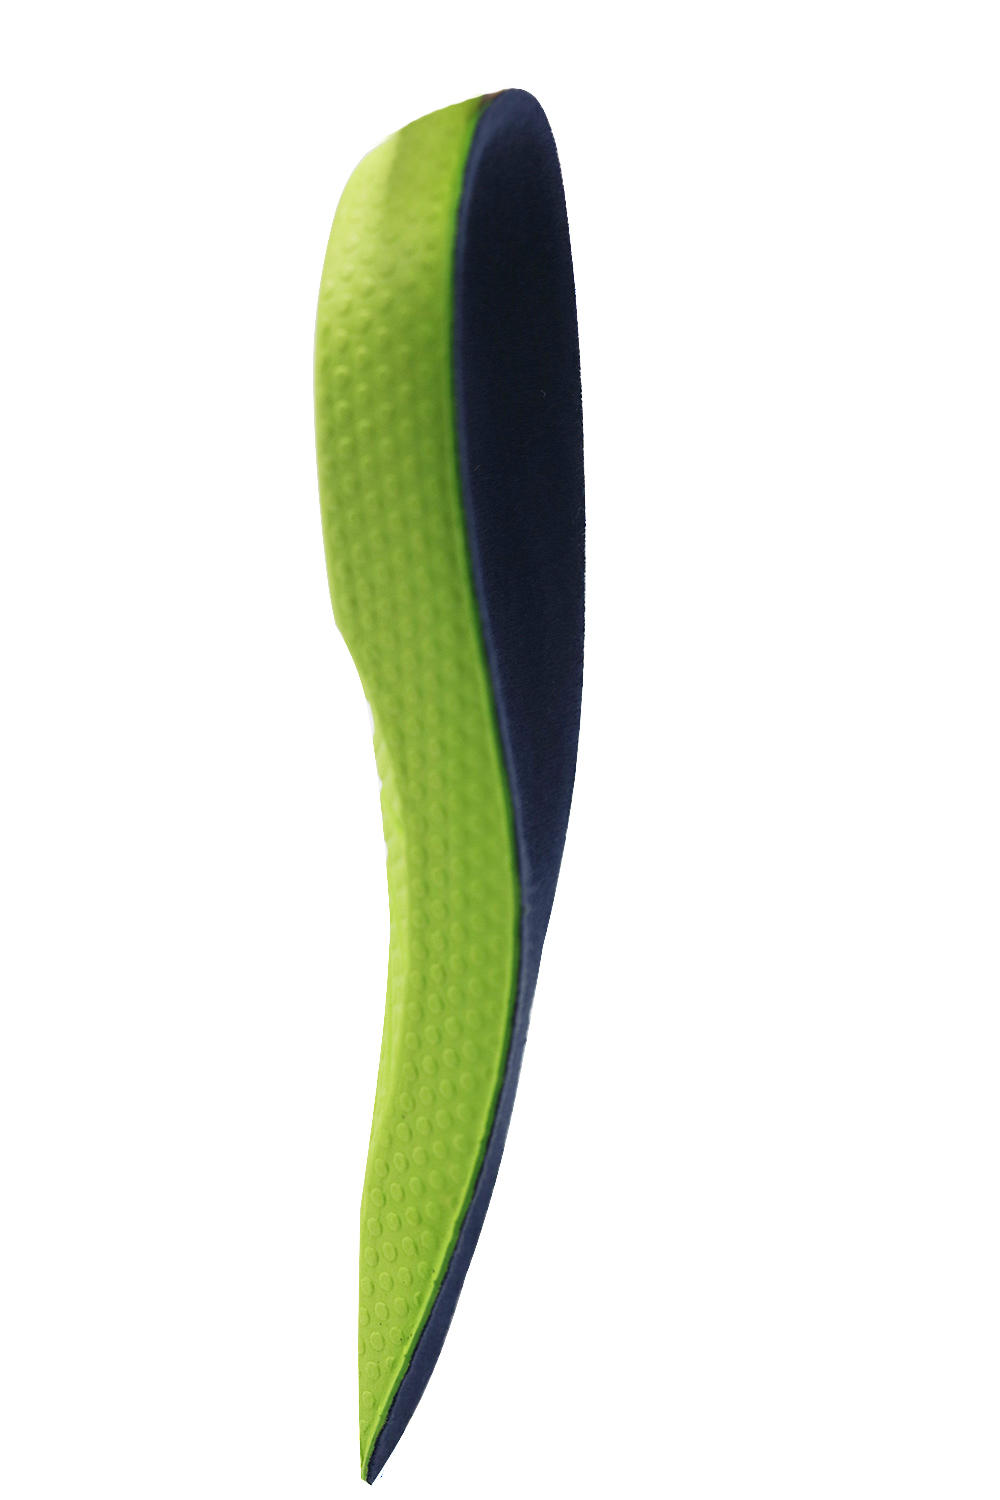 Unisex flat foot heel pad sports shock absorption arch support velvet surface anti-slip sweat-absorbent